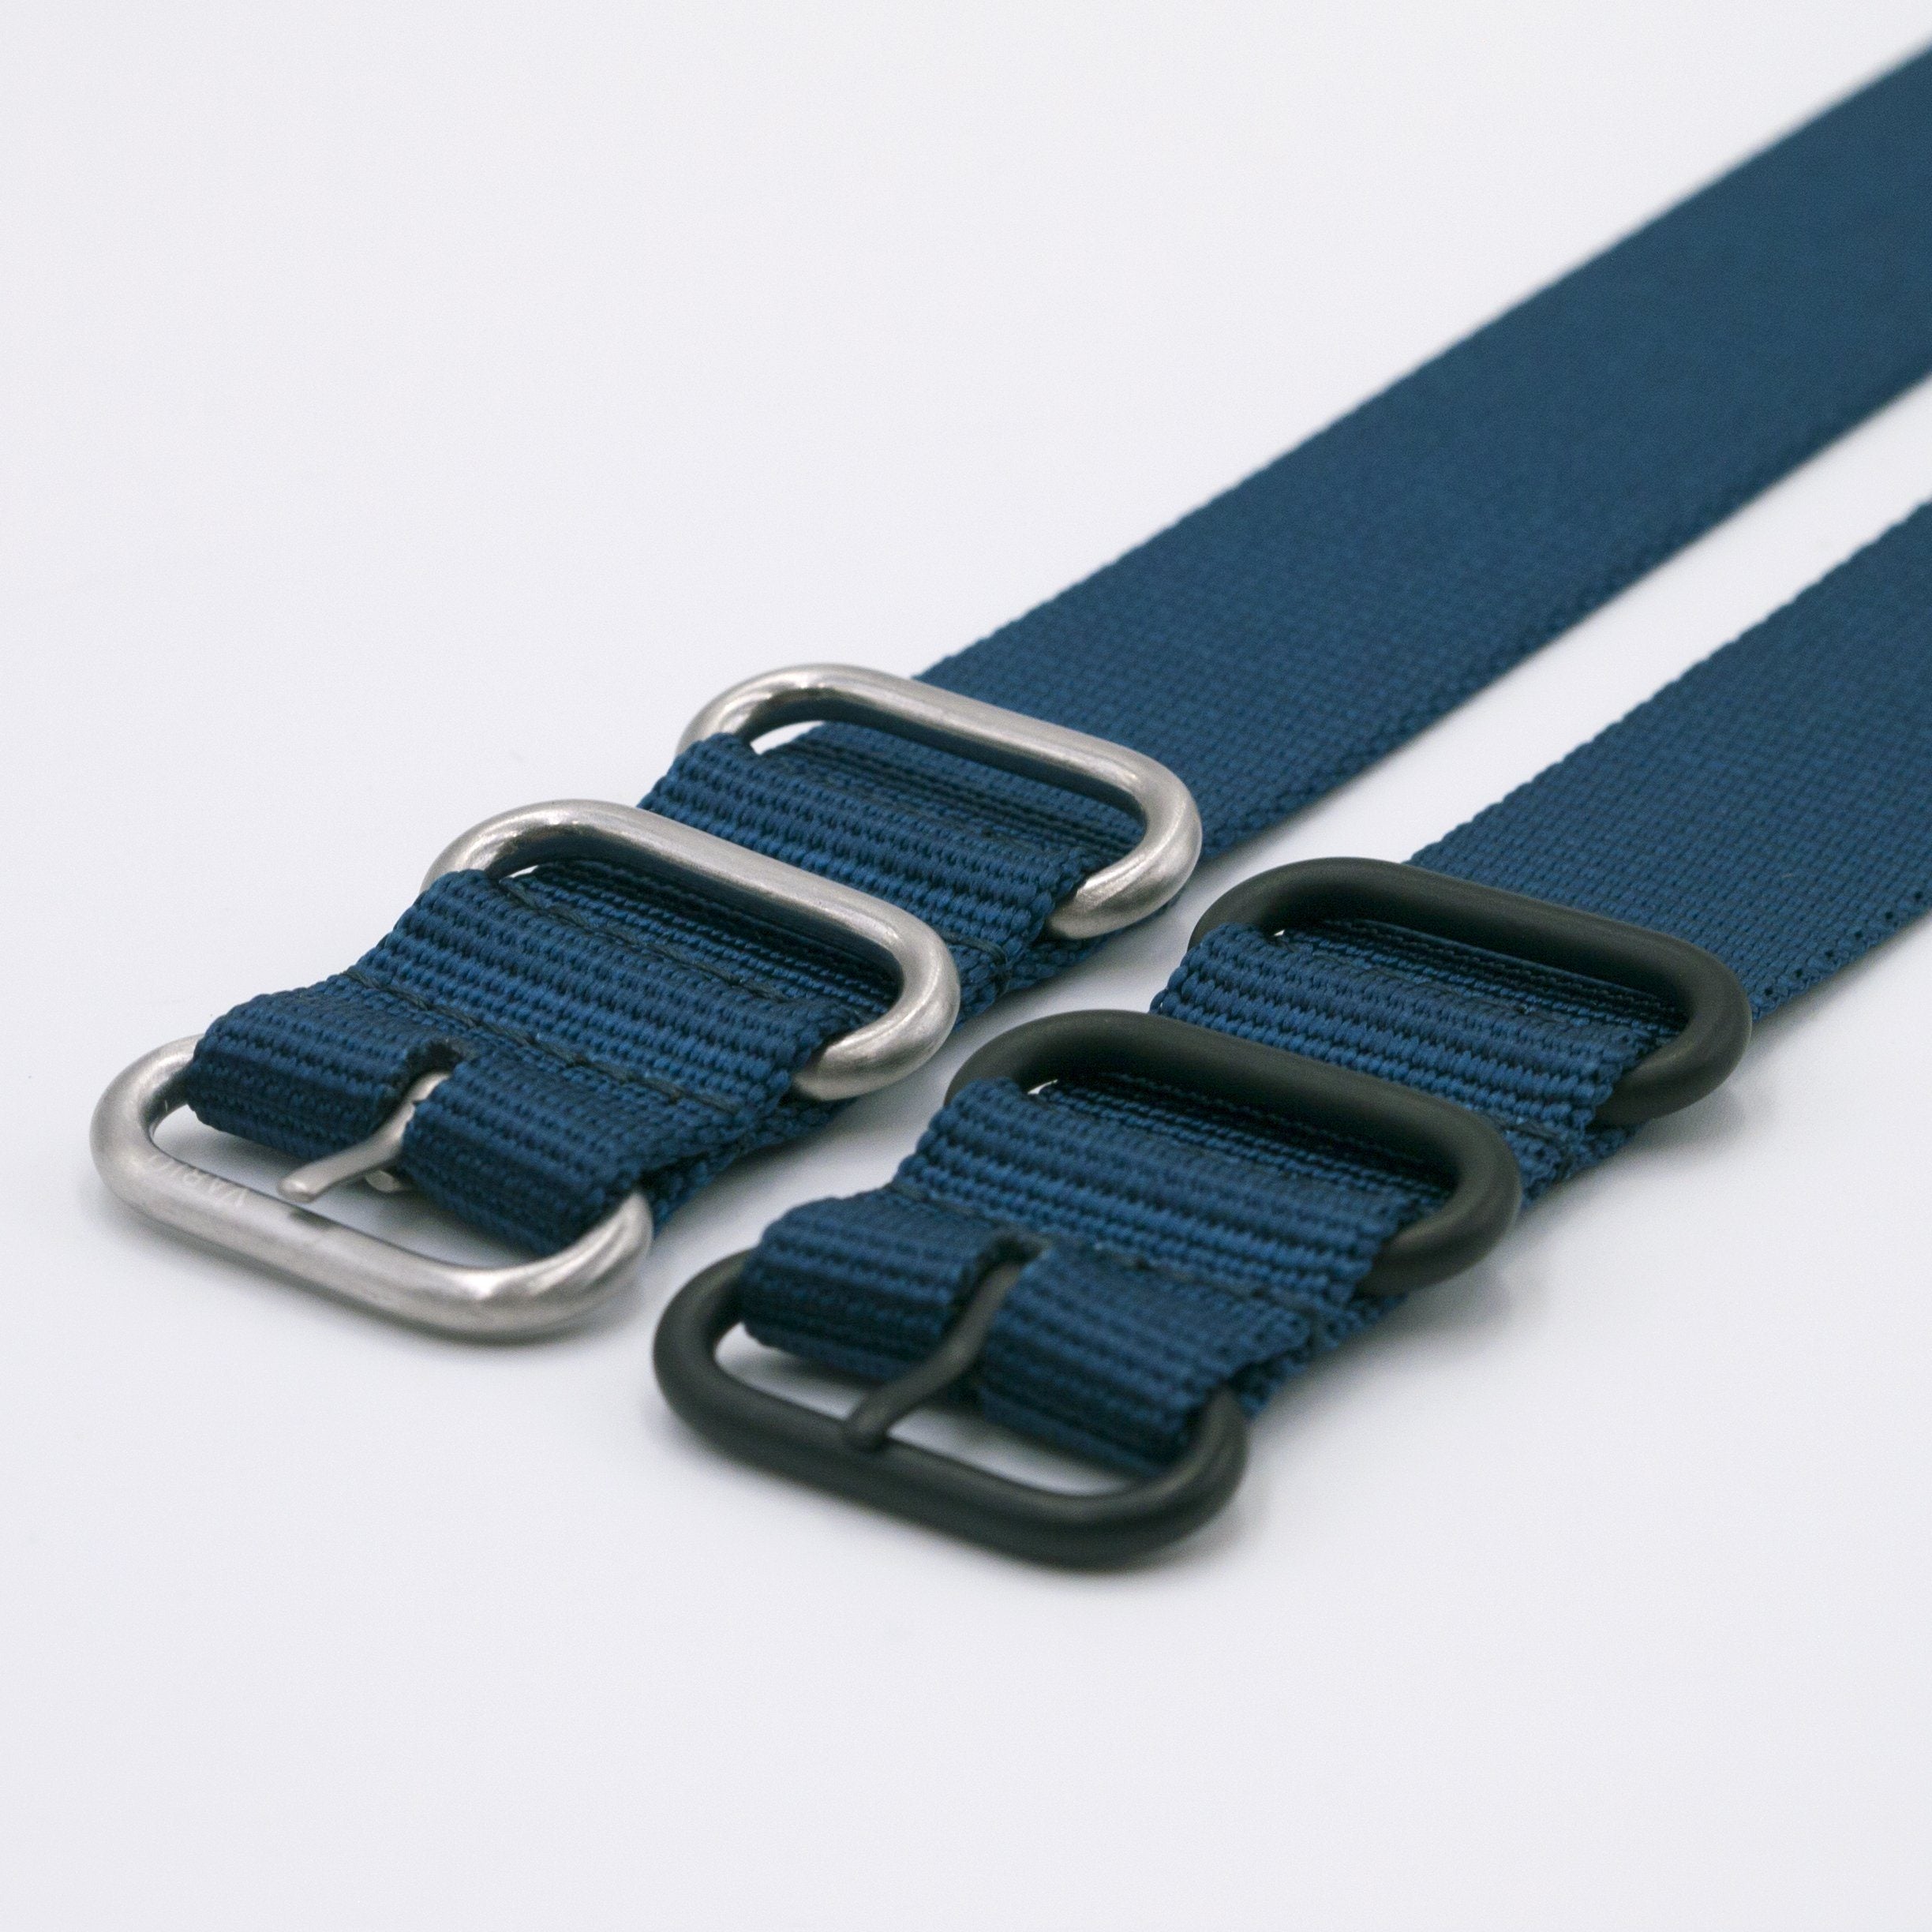 dark blue ballistic nylon maratac strap with silver and black buckle